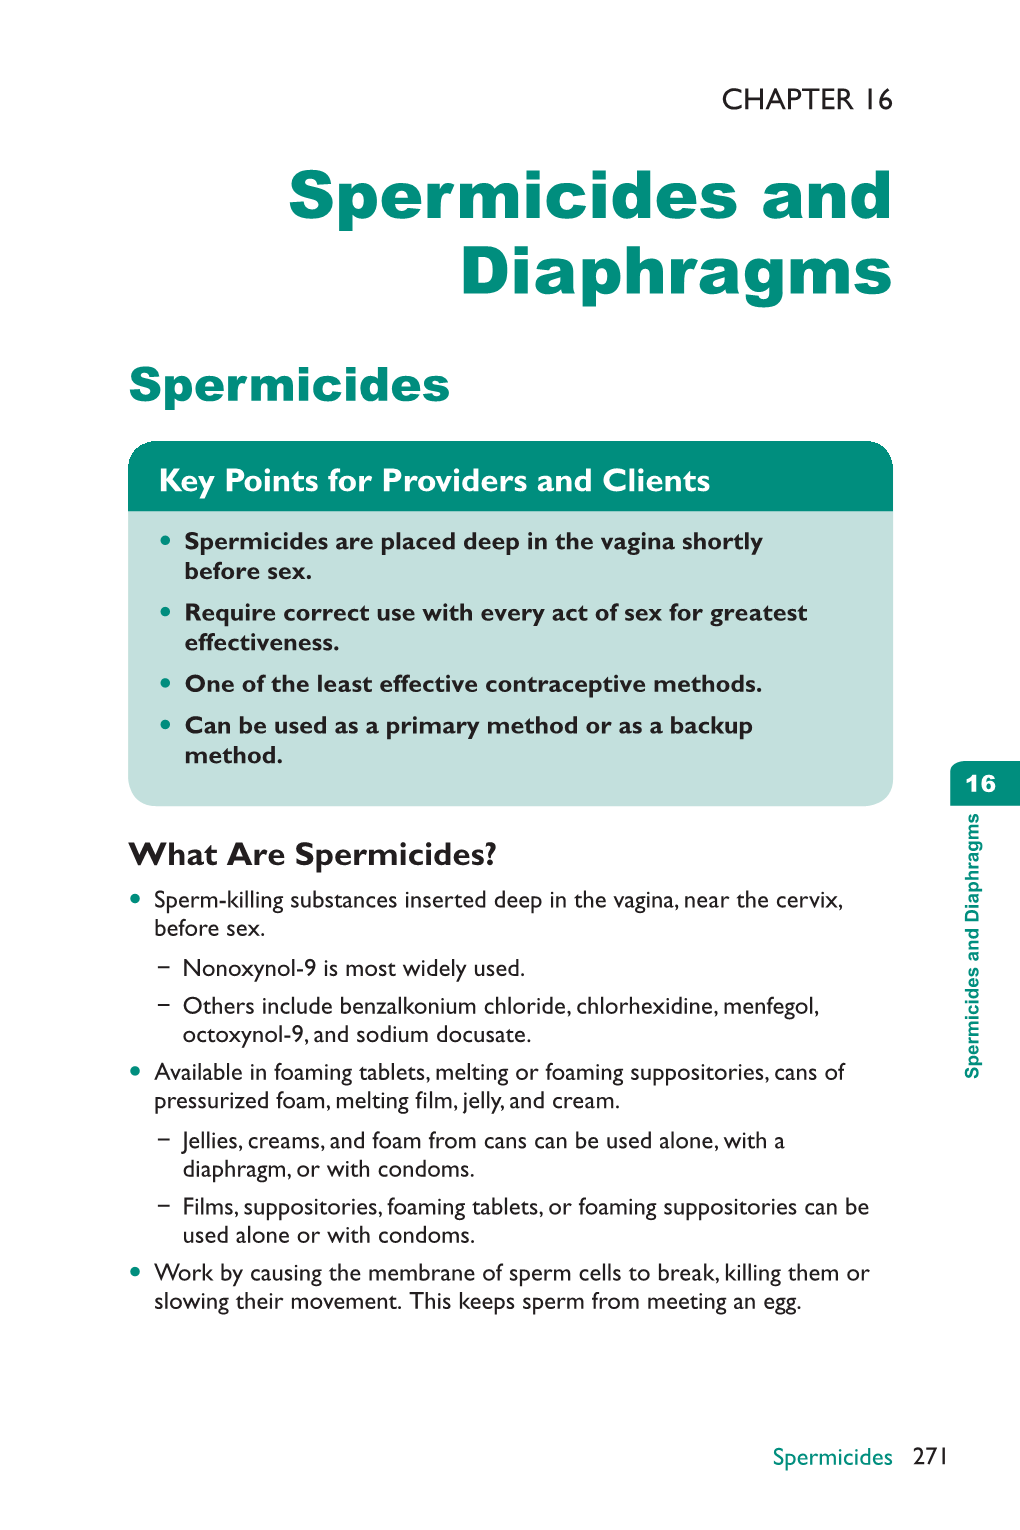 Spermicides and Diaphragms